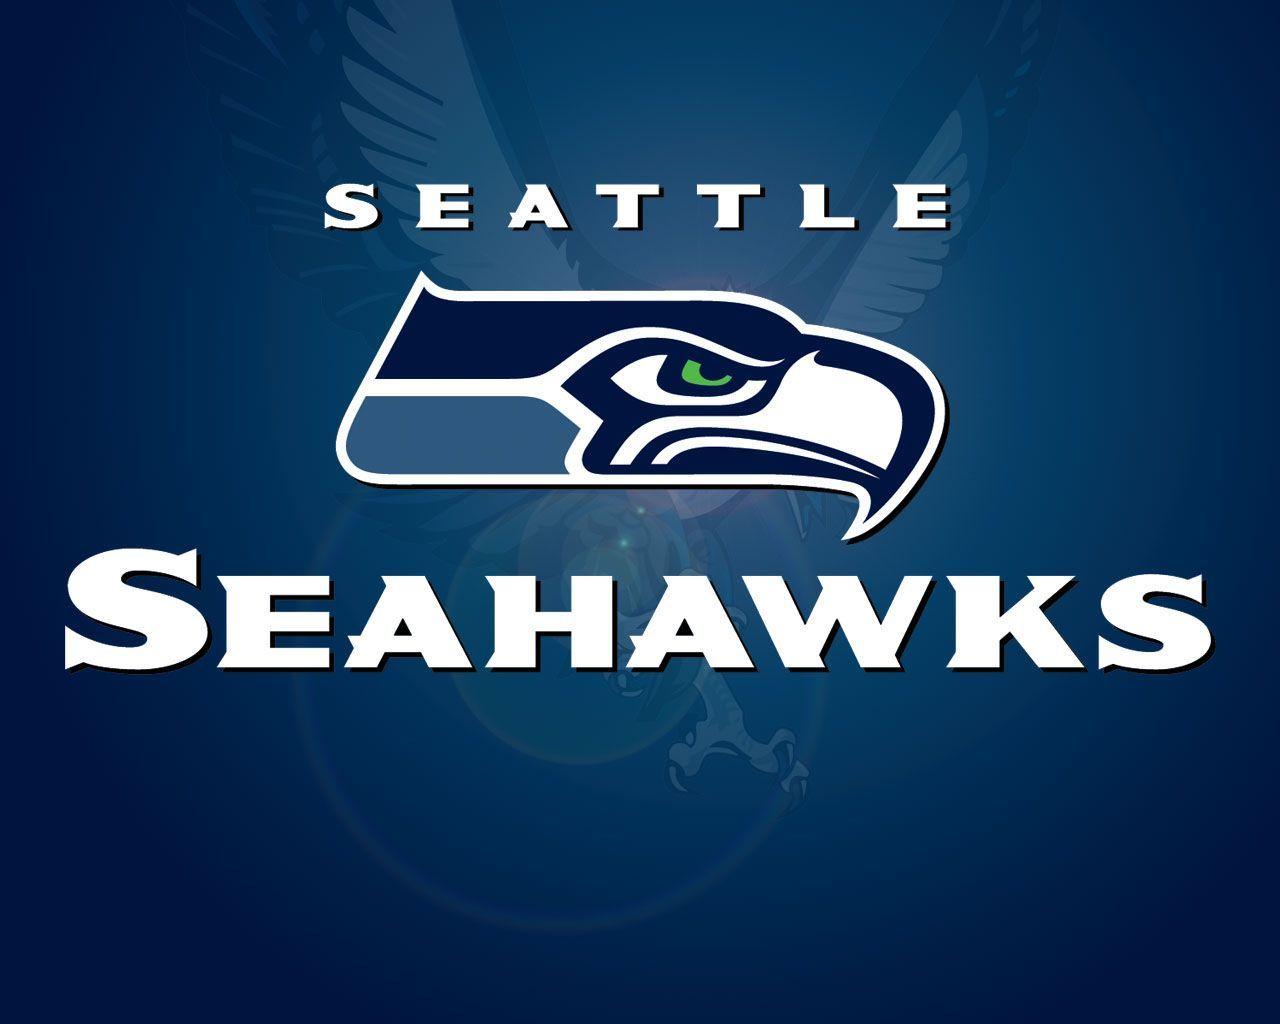 Logo hình ảnh 1280x1024 Seattle seahawks.  Tên và logo Seattle Seahawks